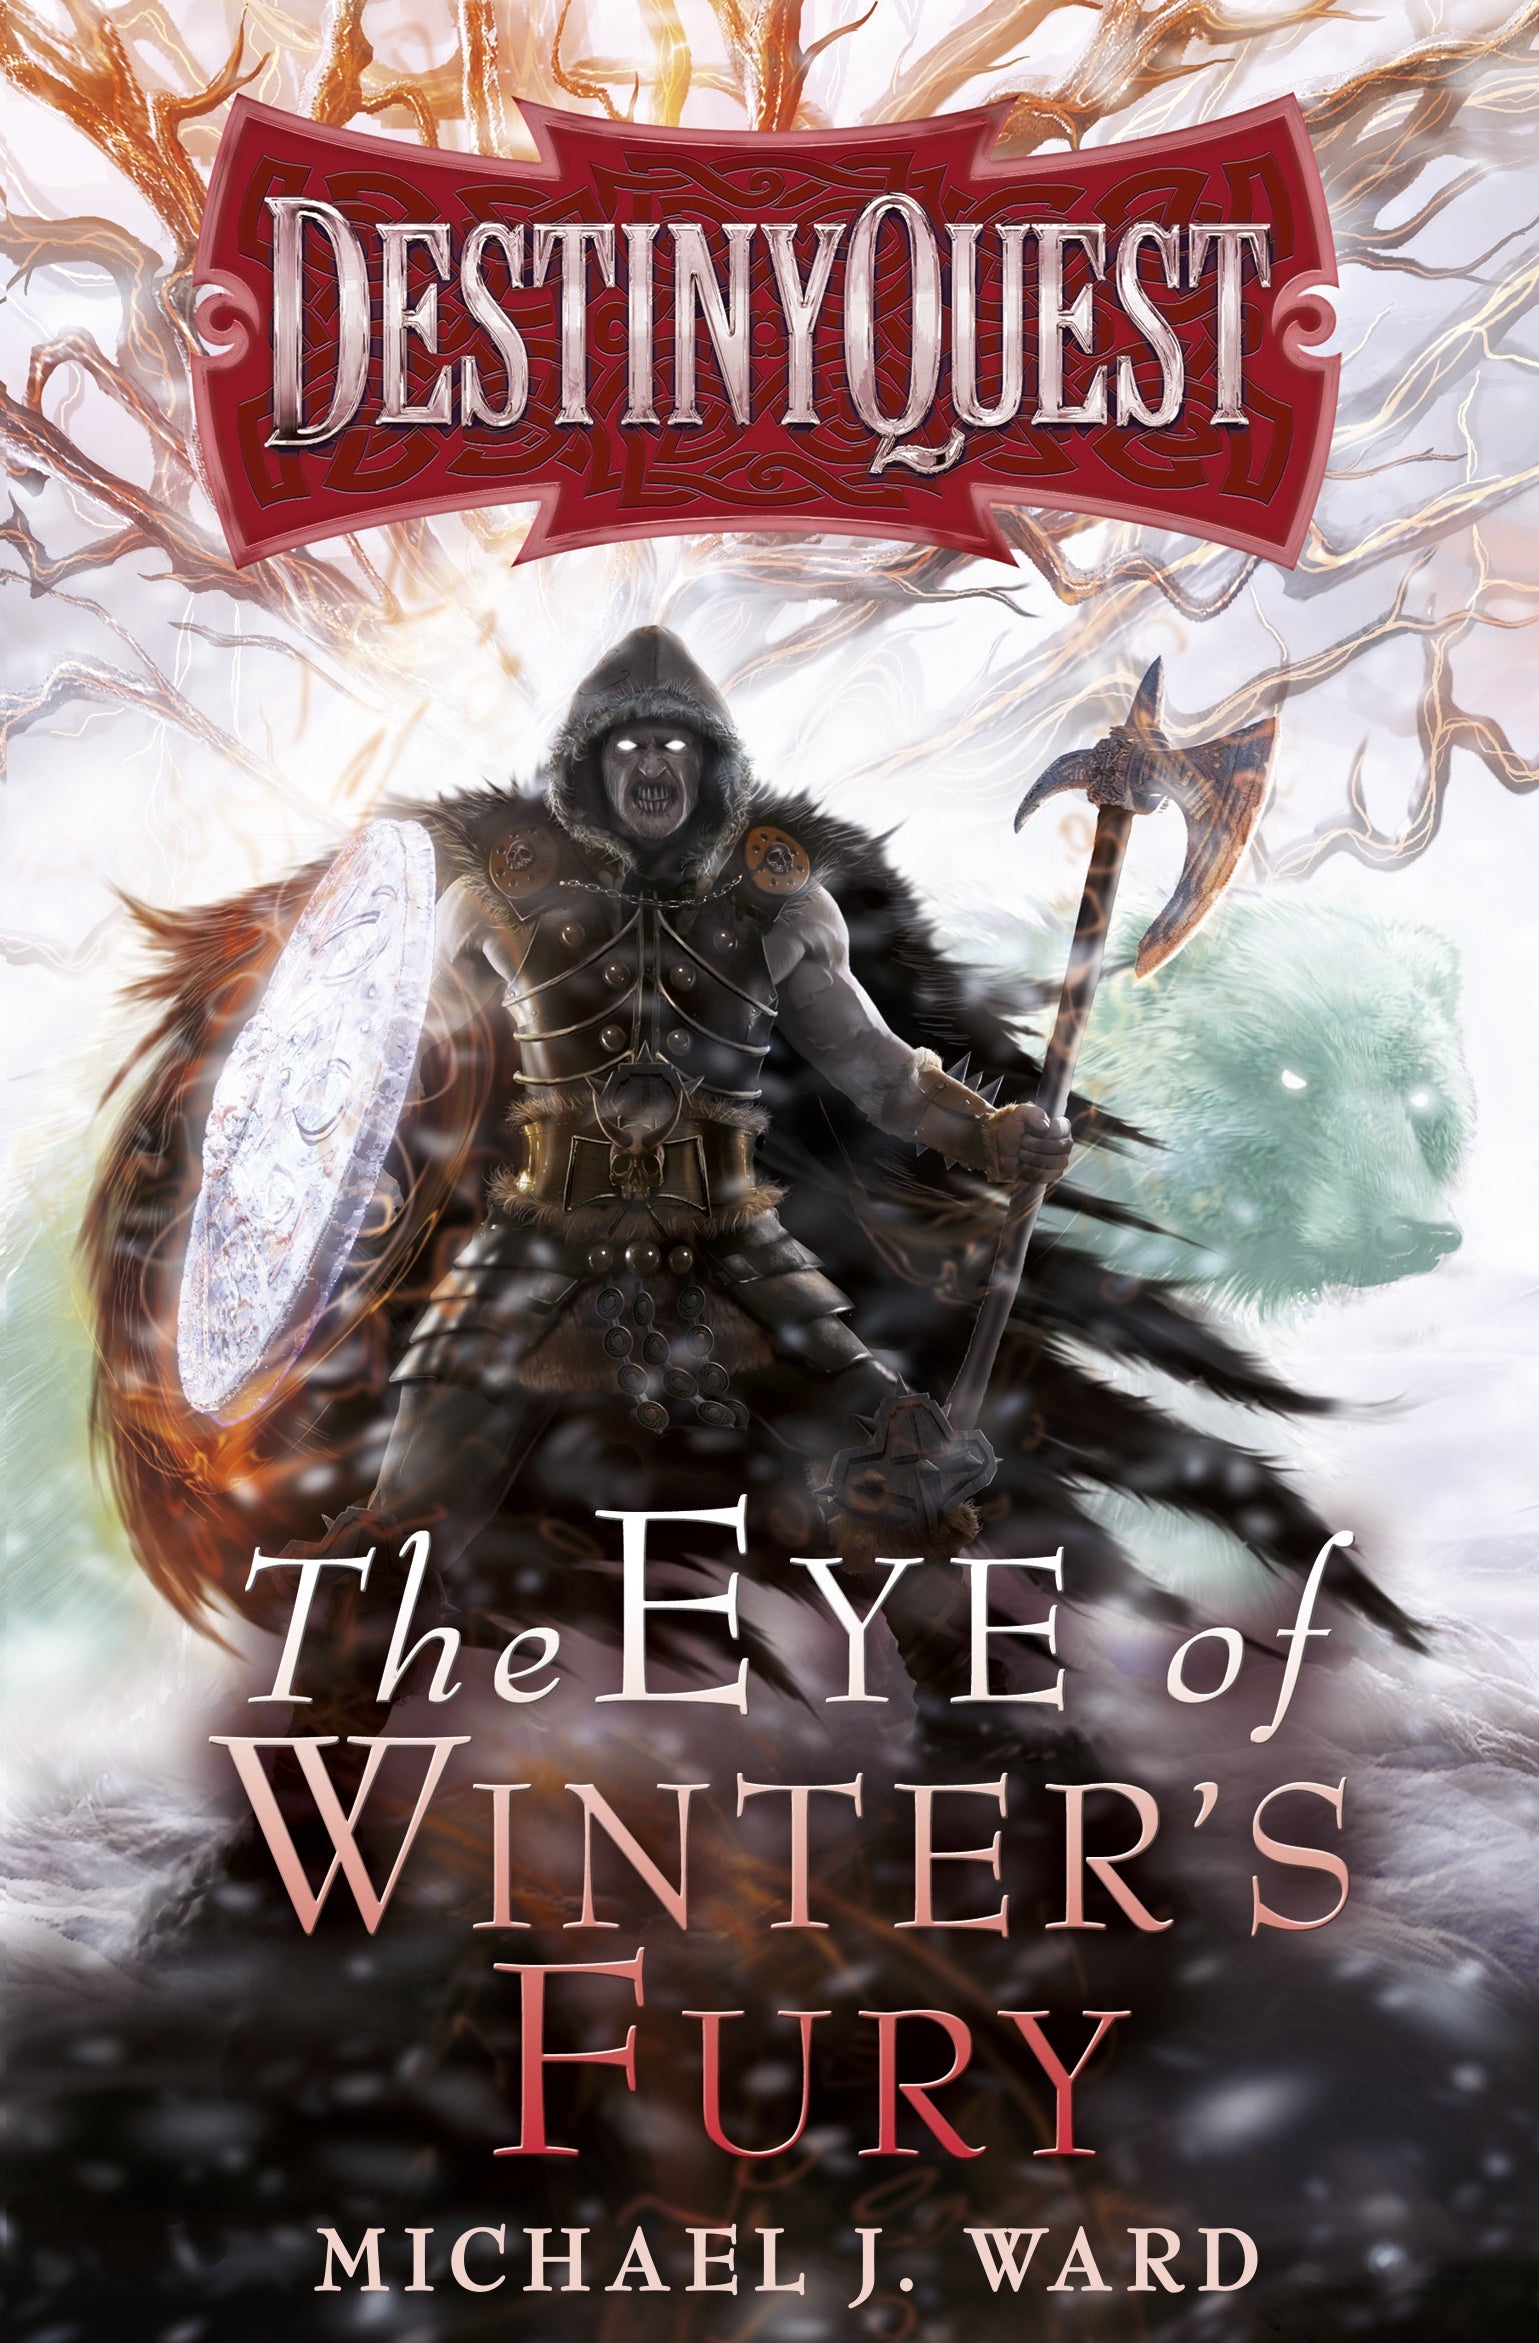 The Eye of Winter's Fury by Michael J. Ward